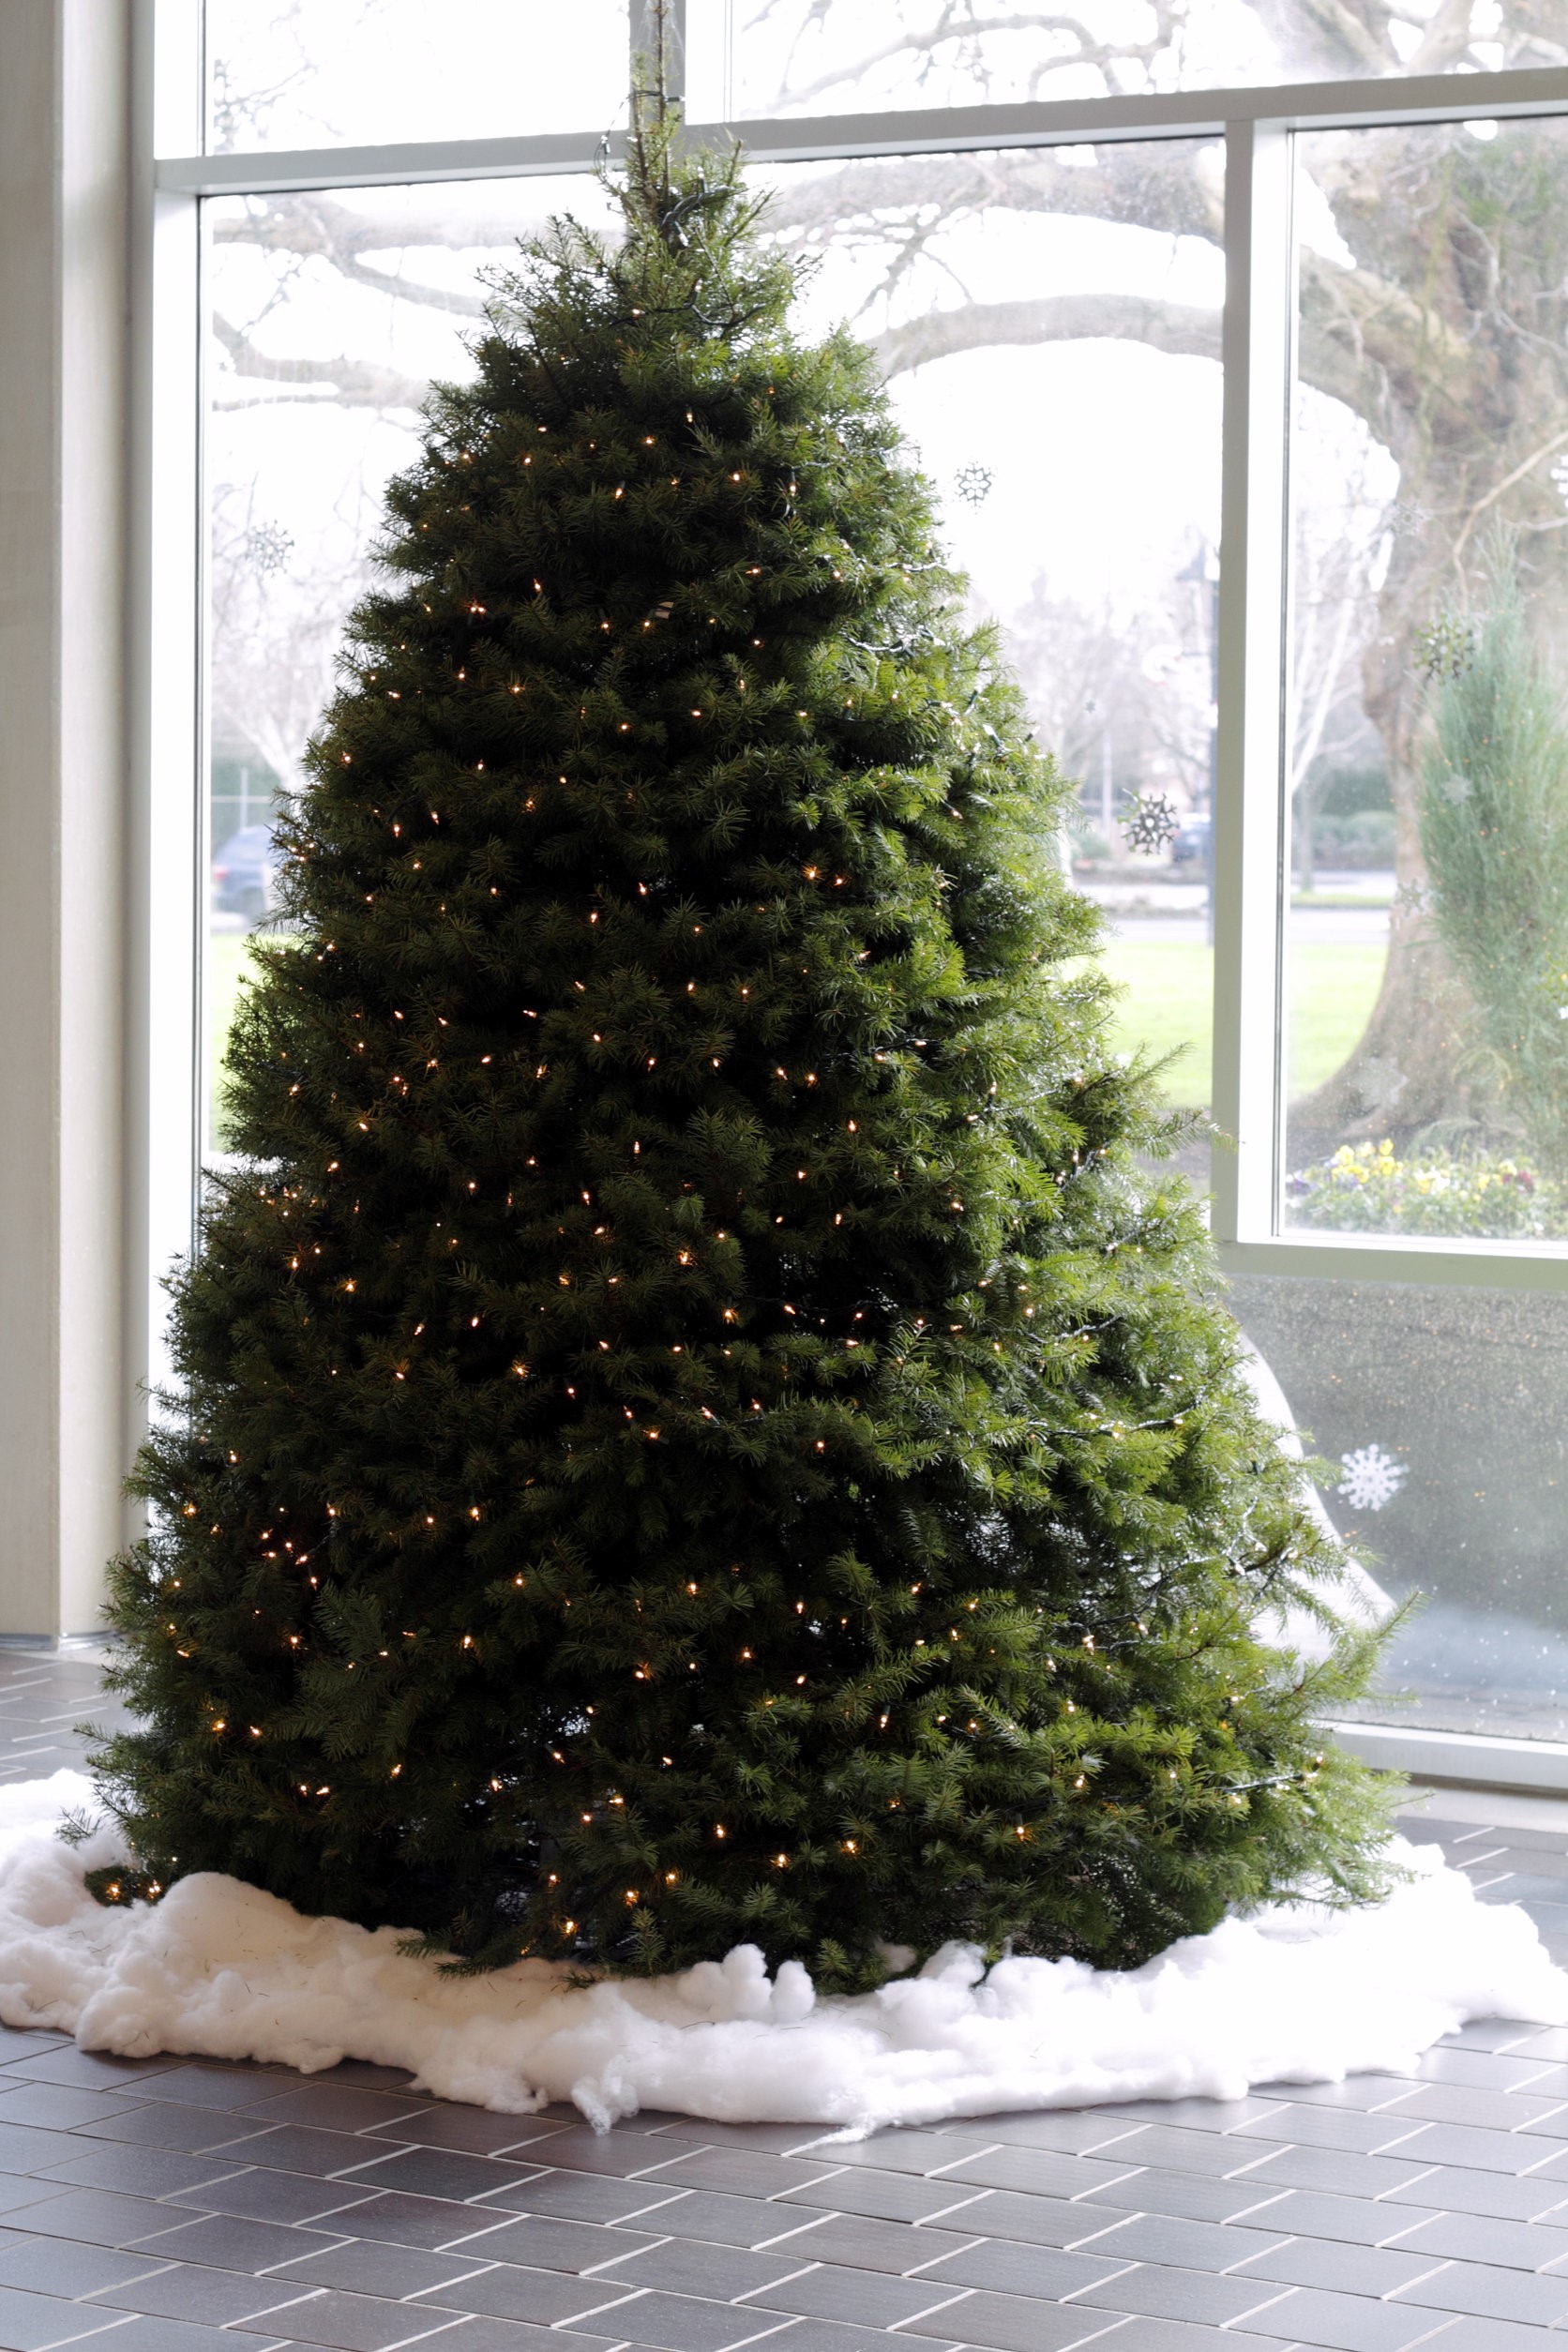 Tree for the holiday season